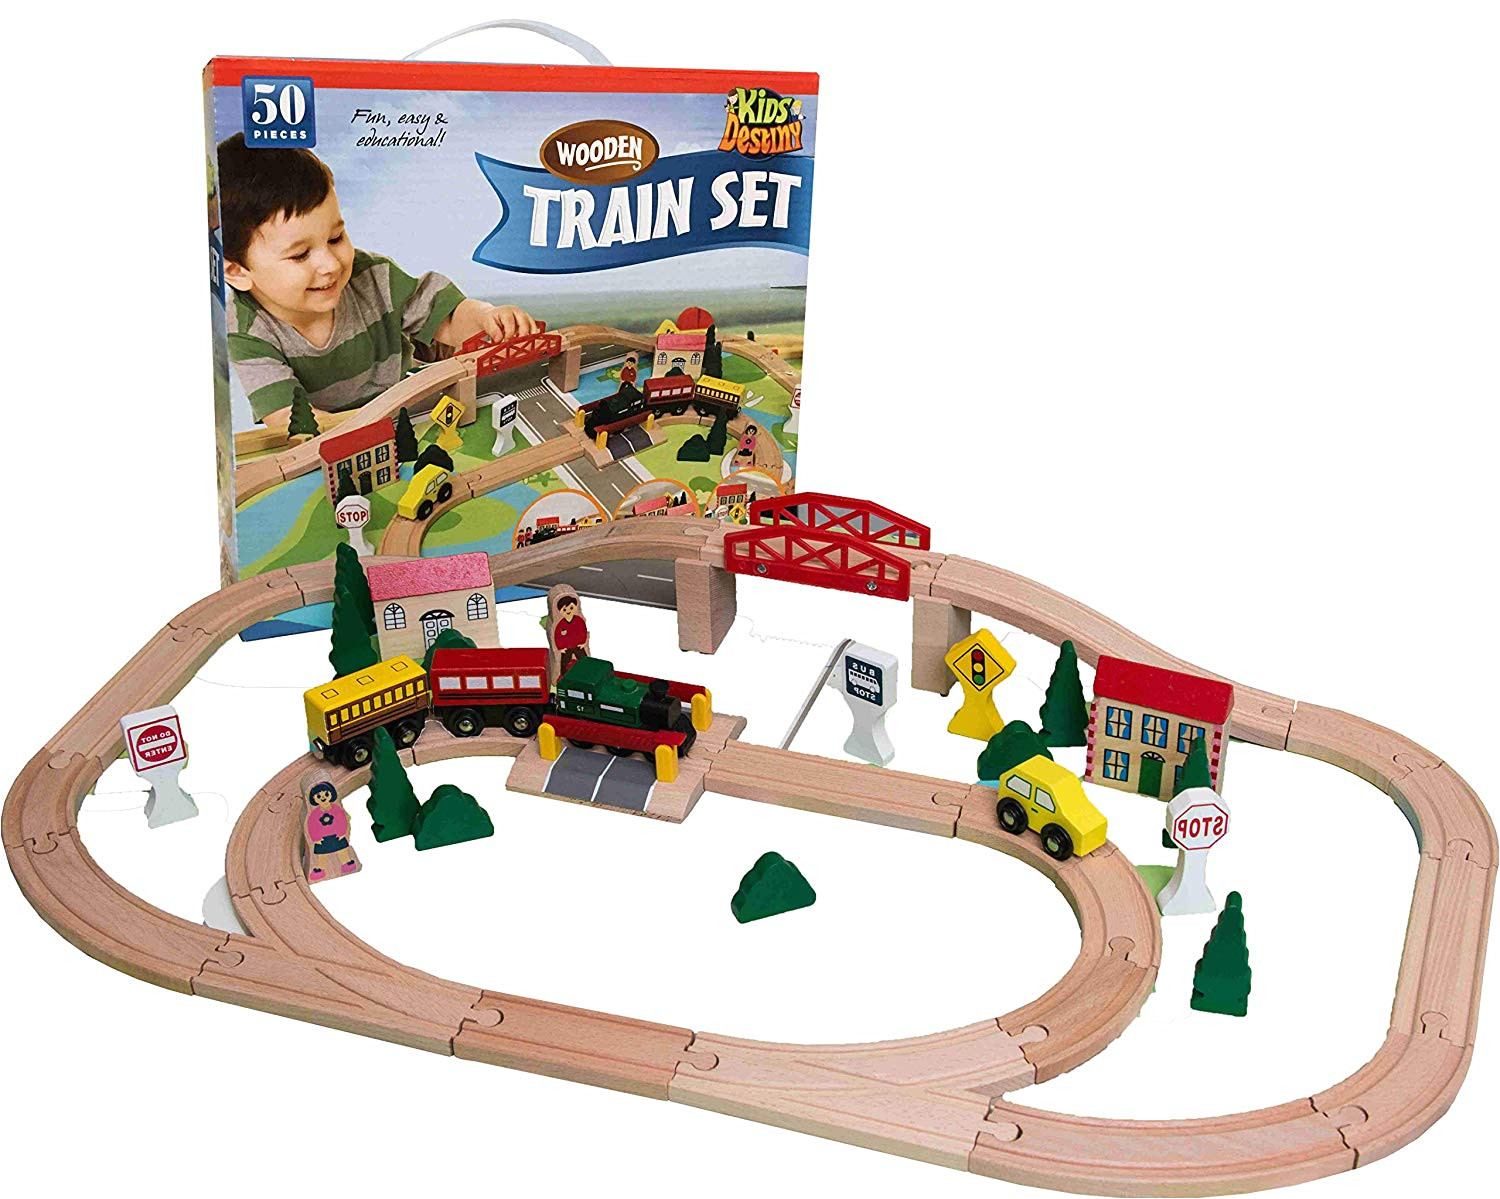 amazon com kids destiny wooden train set for thomas and brio 50 pieces toys games